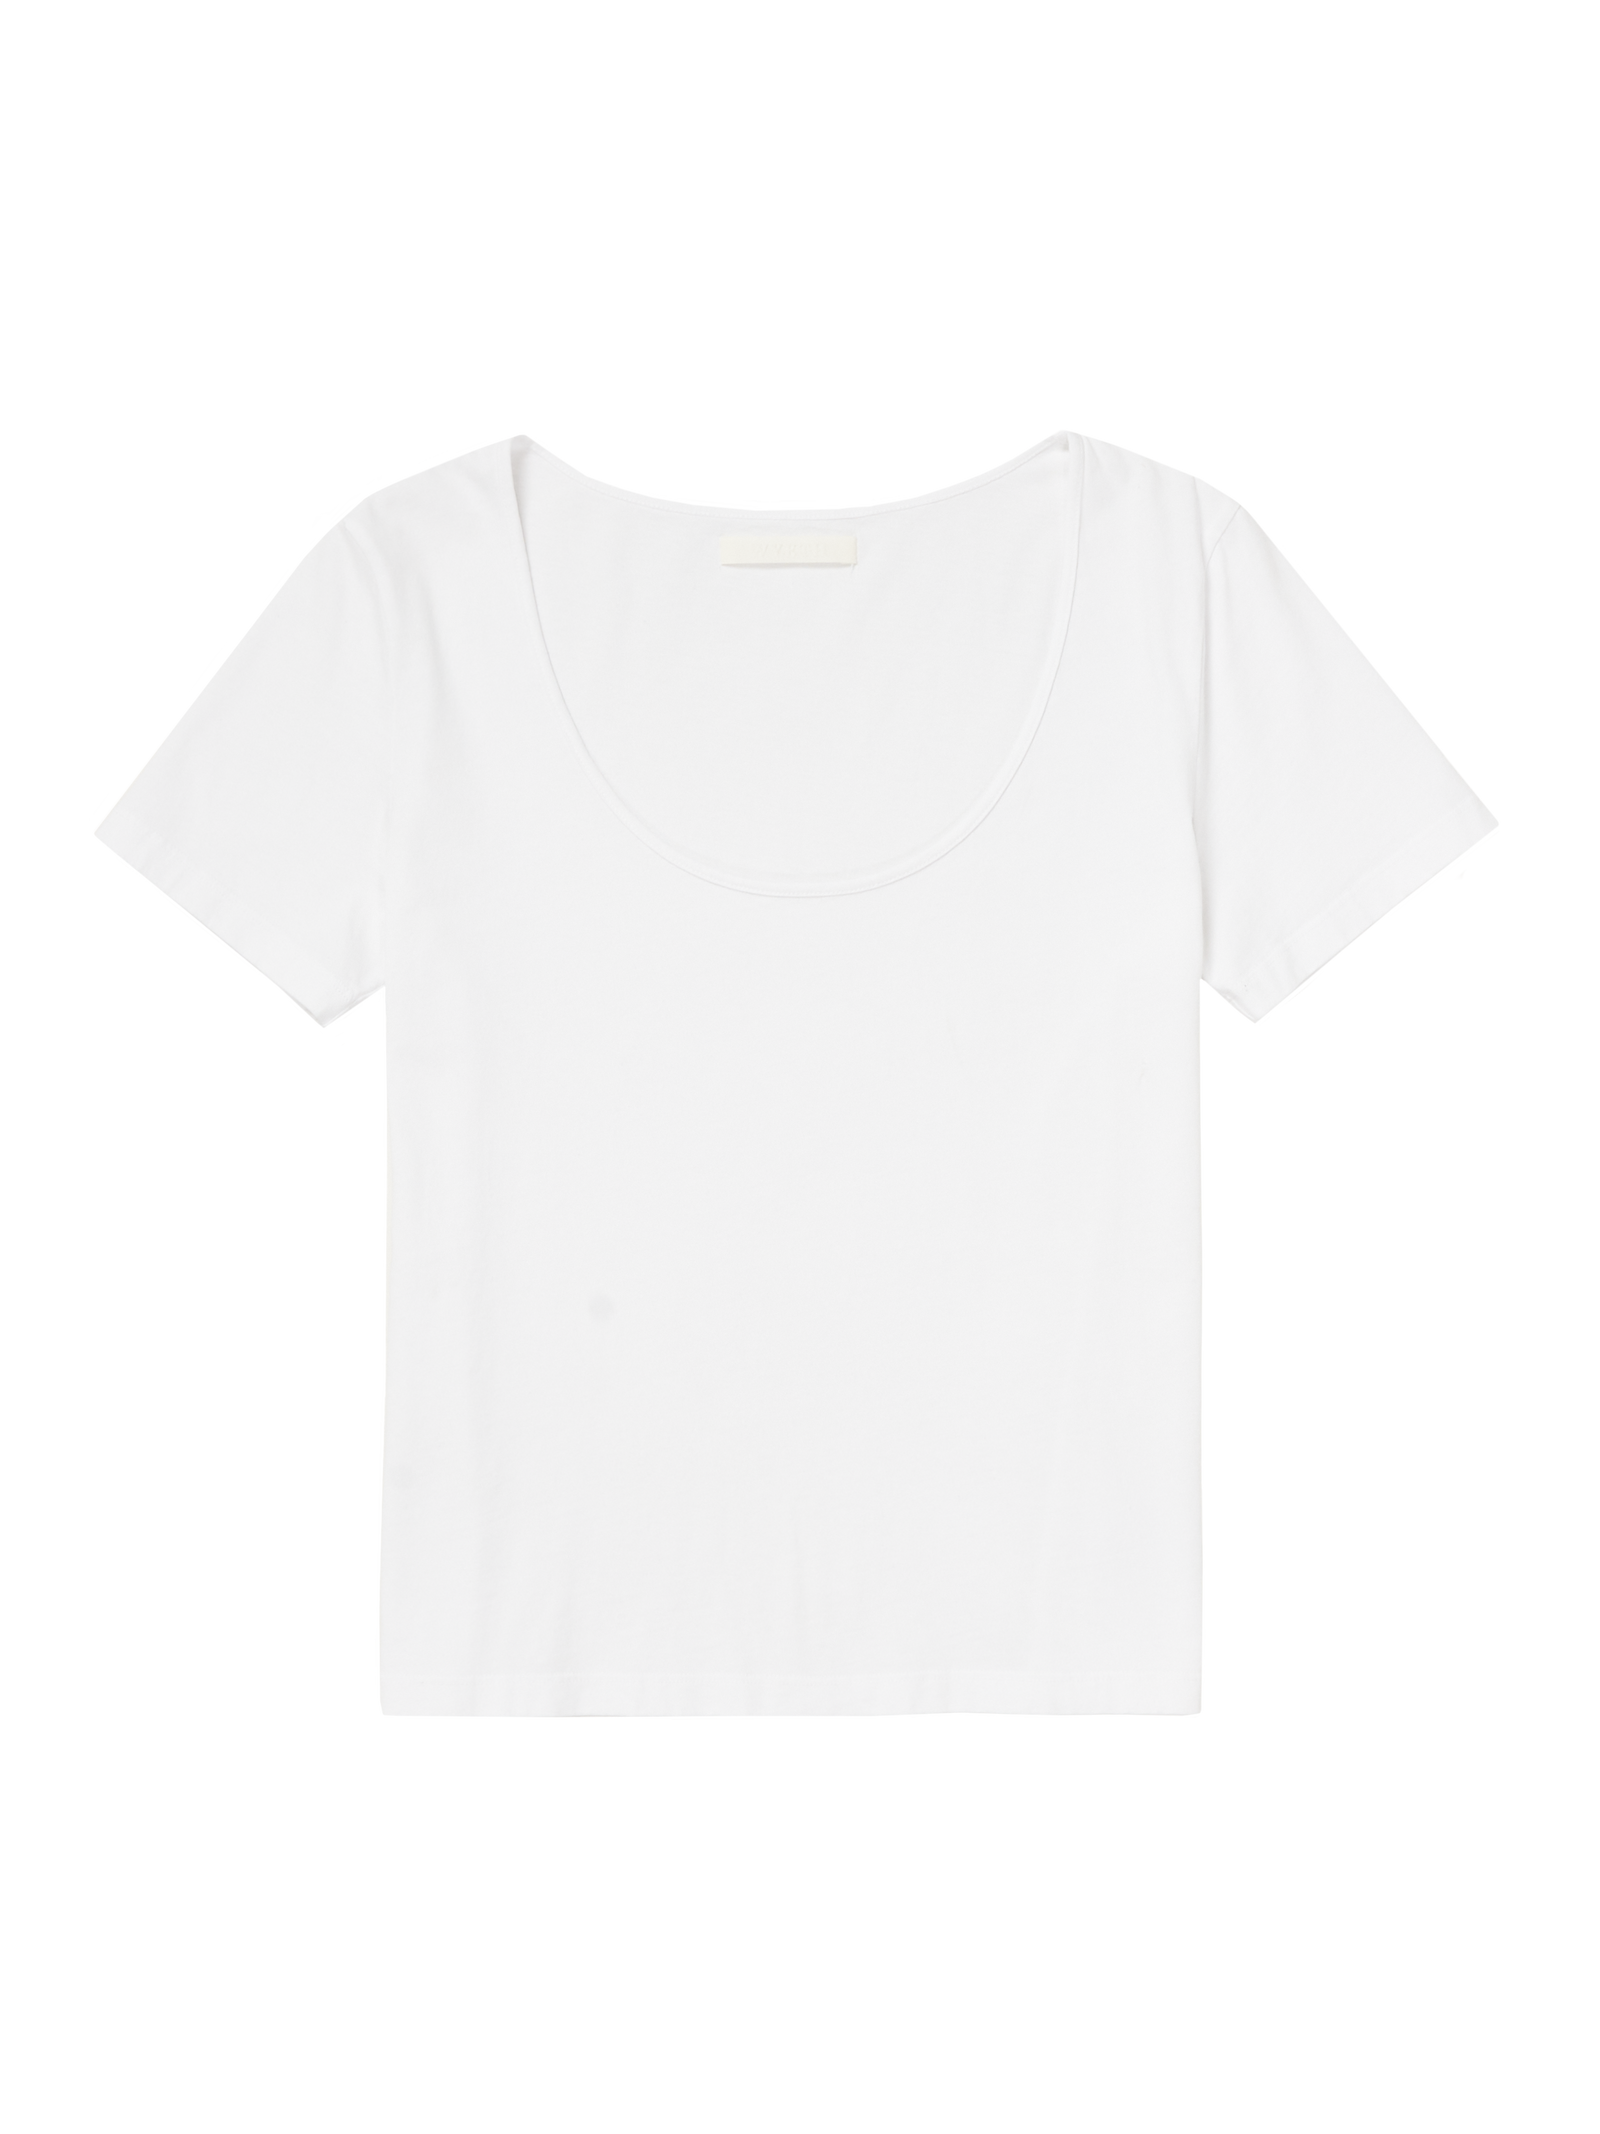 Emma T-Shirt